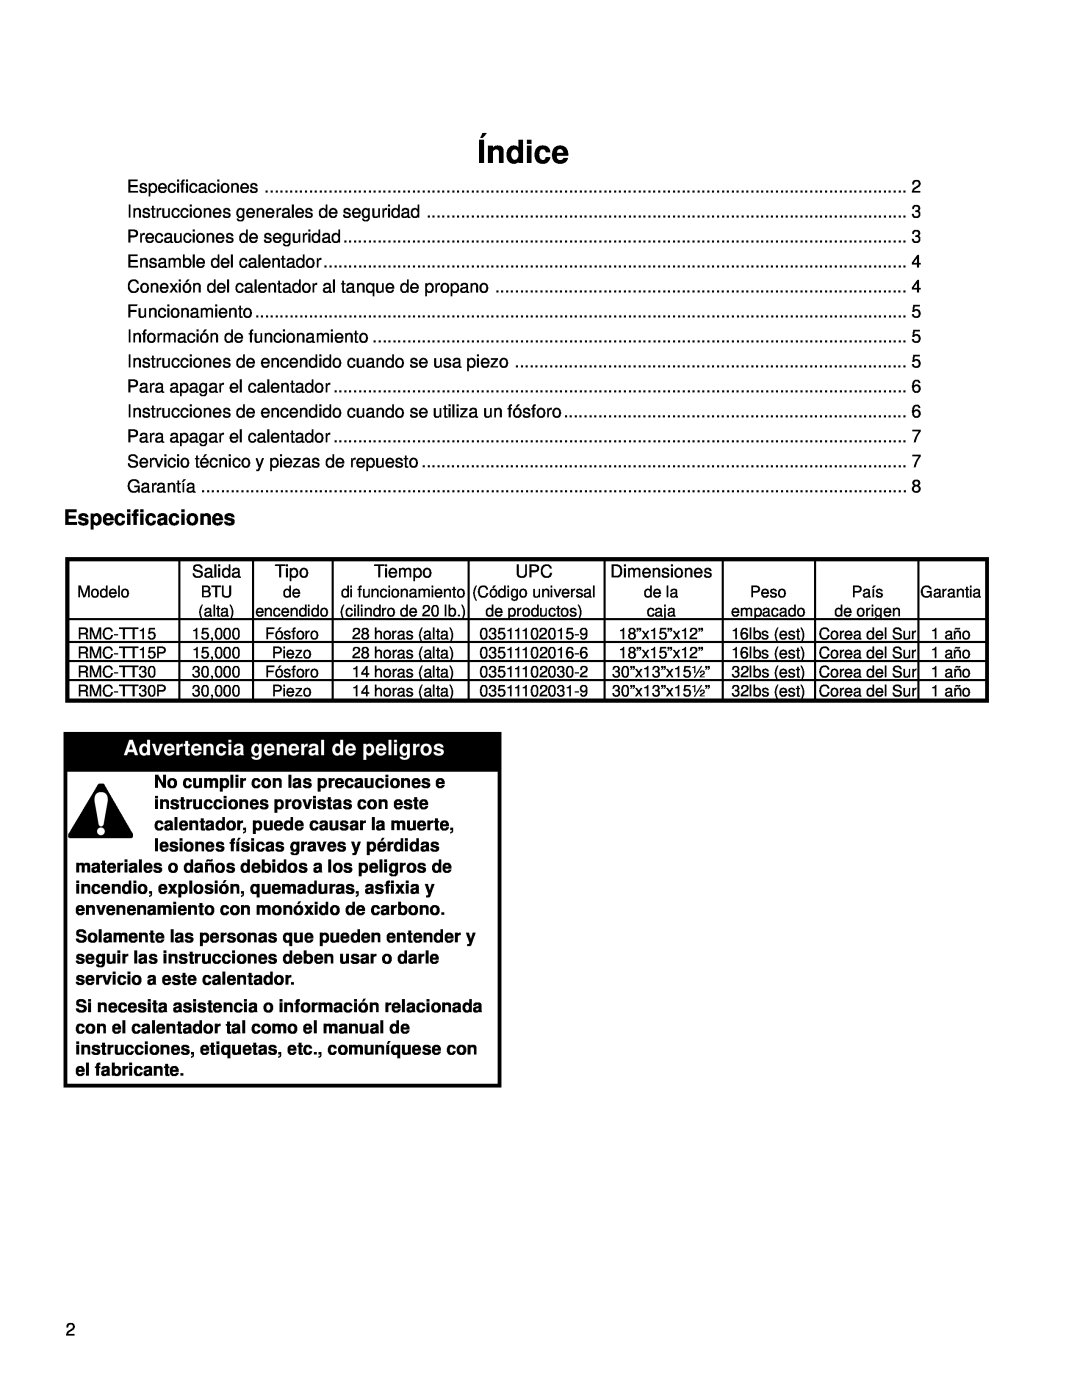 CFM Corporation RMC-TT15P, RMC-TT30P manual Índice, Advertencia general de peligros, Especificaciones 